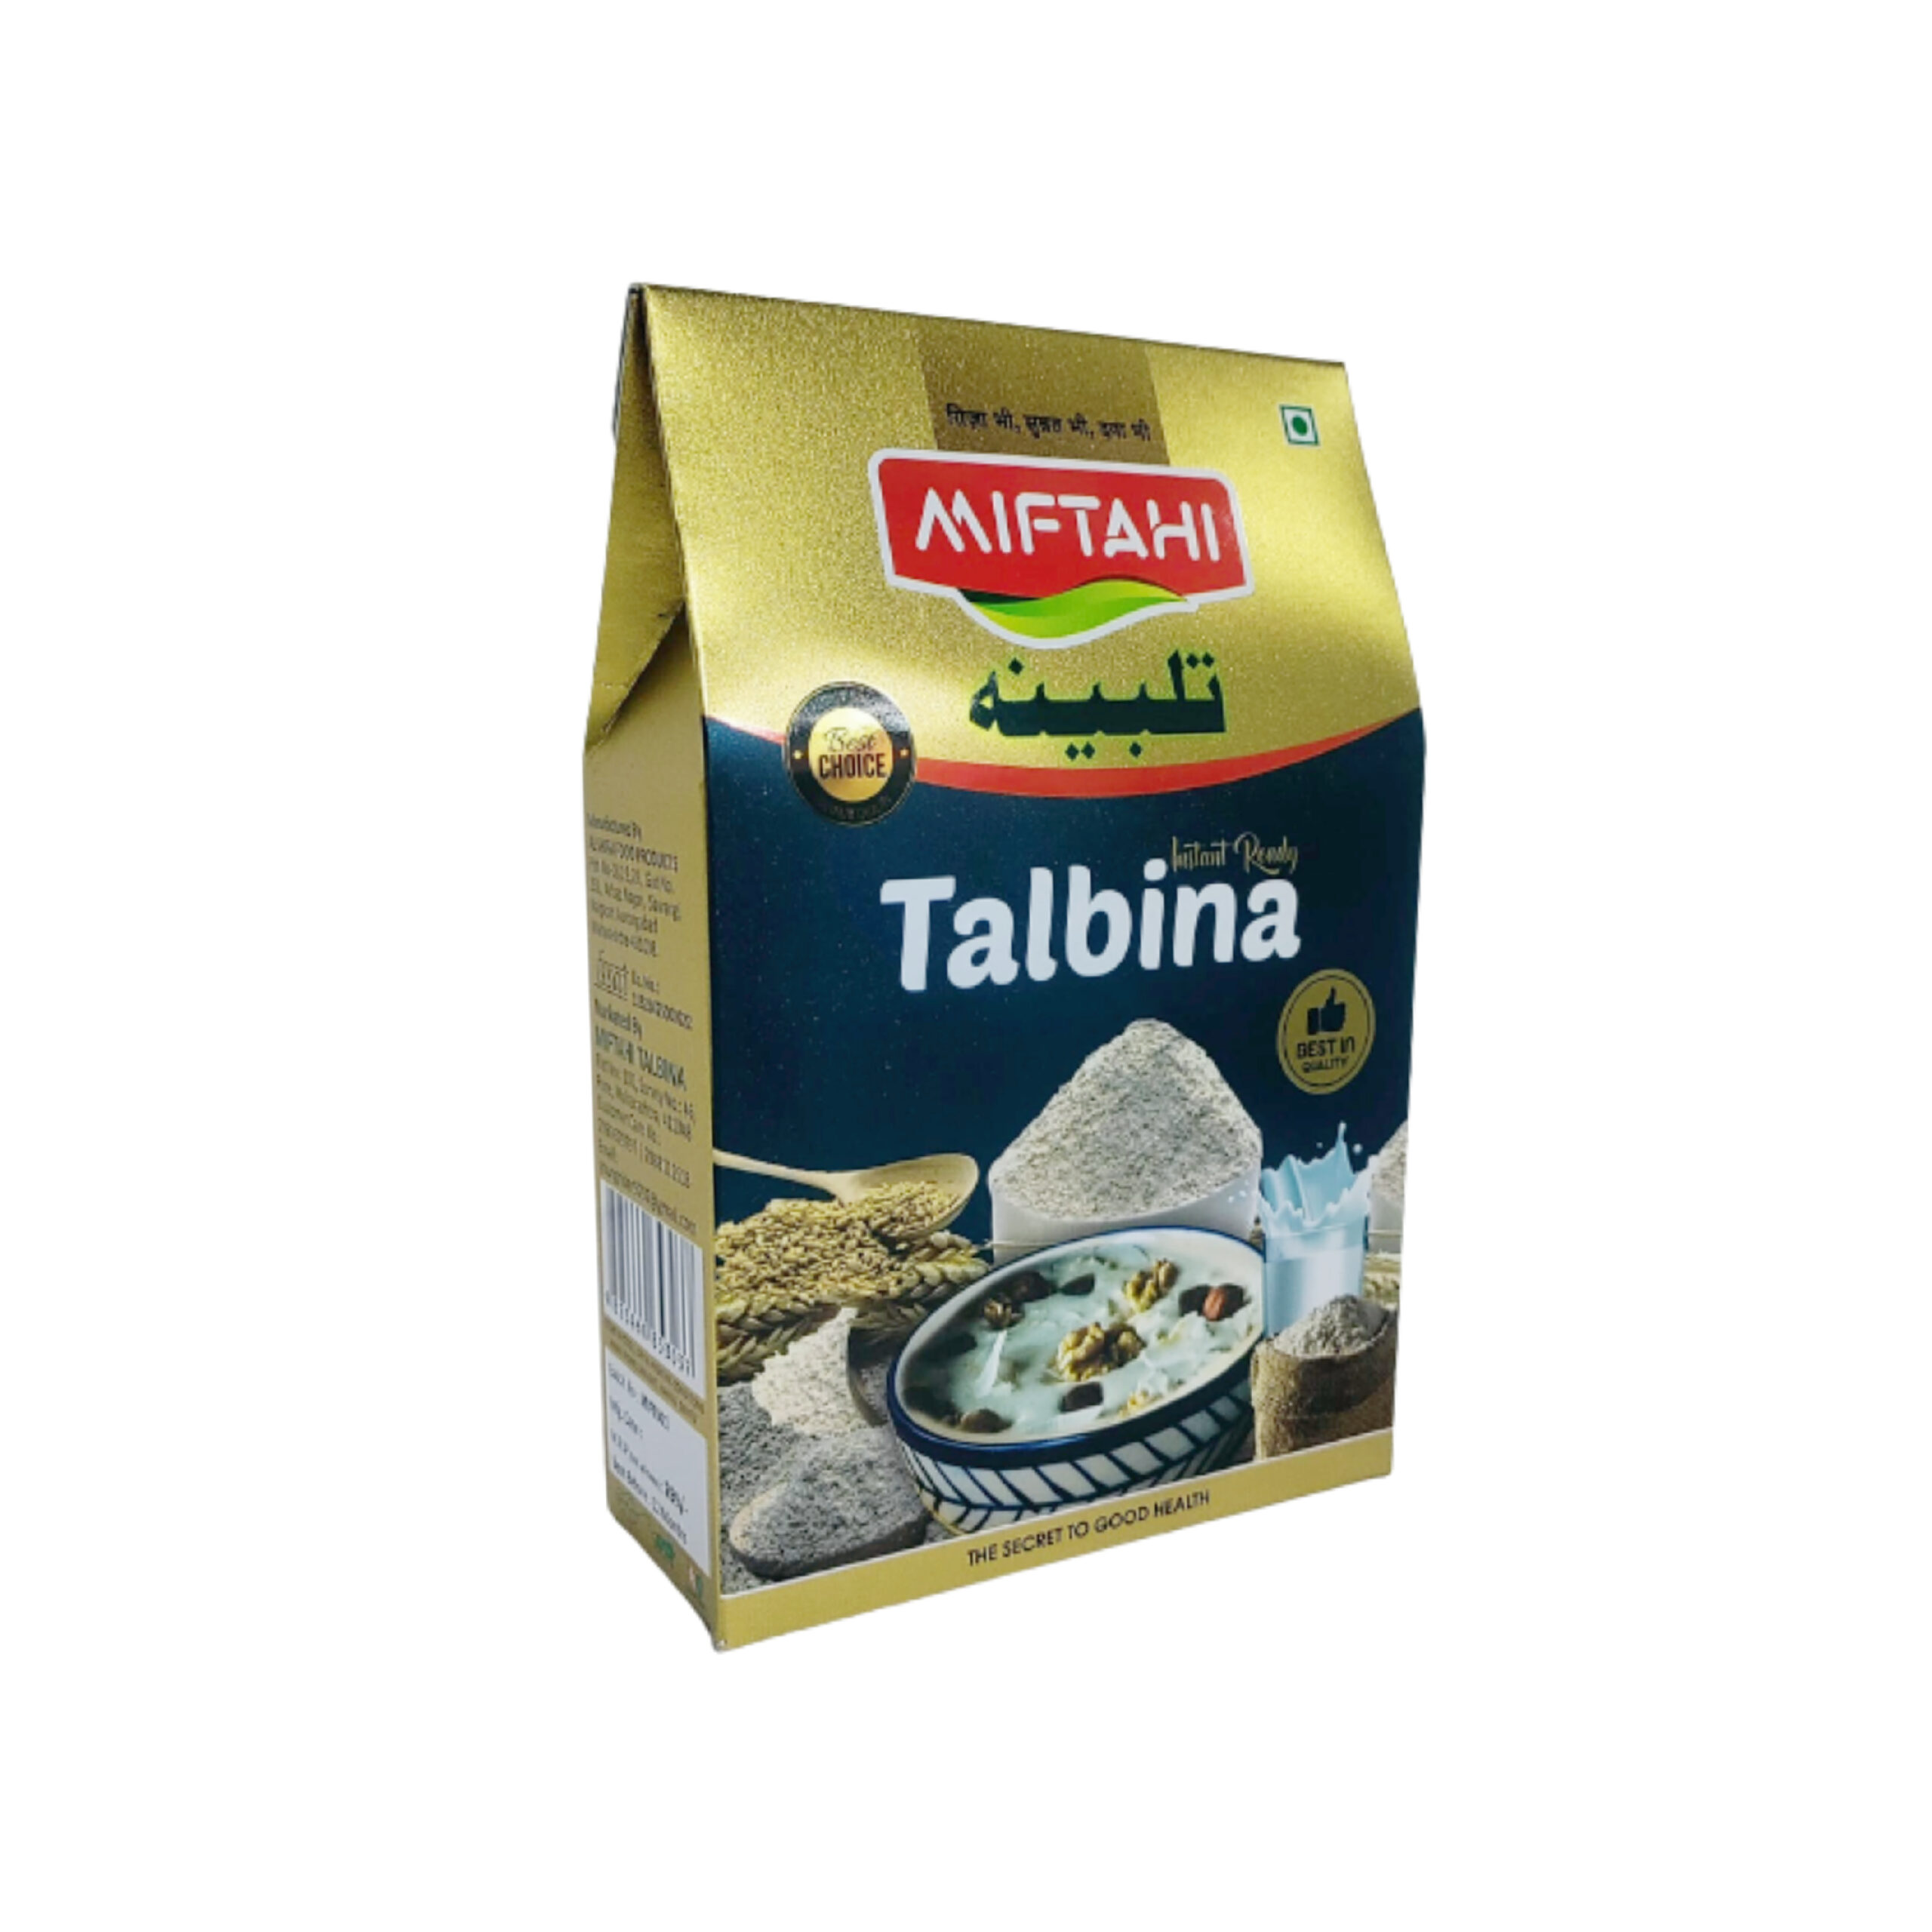 Talbina - Miftahi Shop